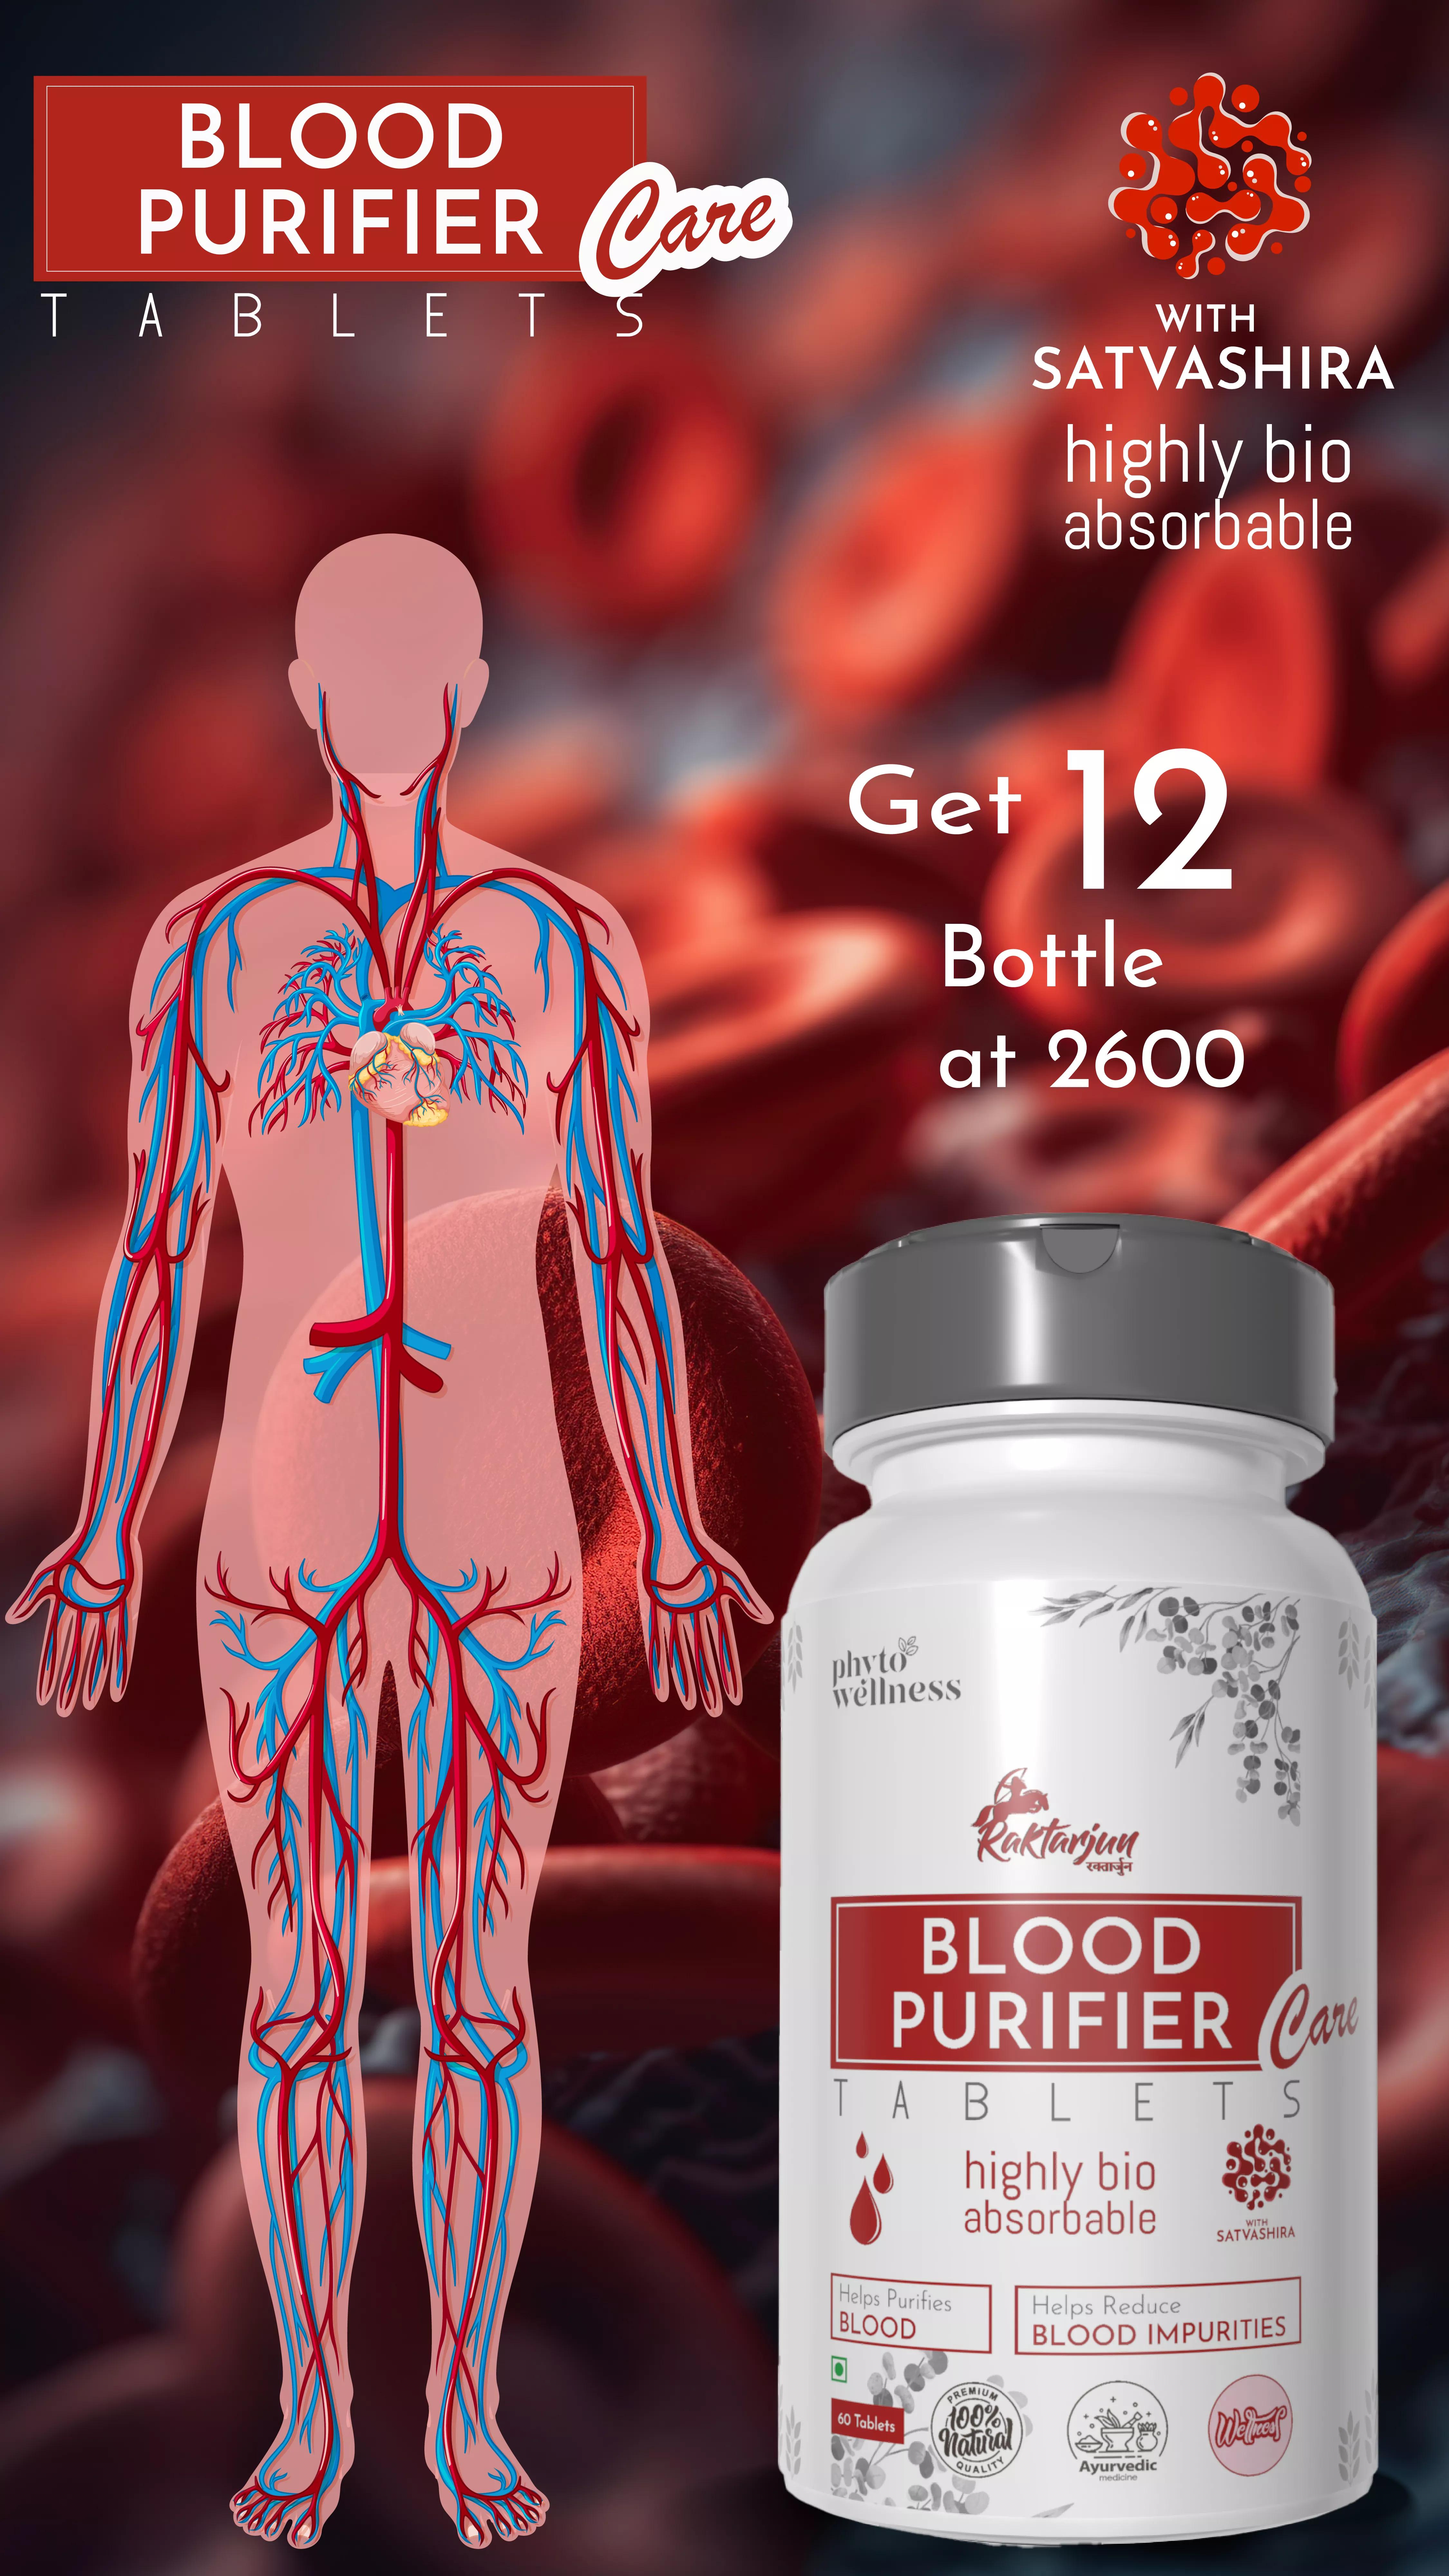 RBV B2B Probiotic Blood Purifier Care 60 Tablets 12 Pcs.